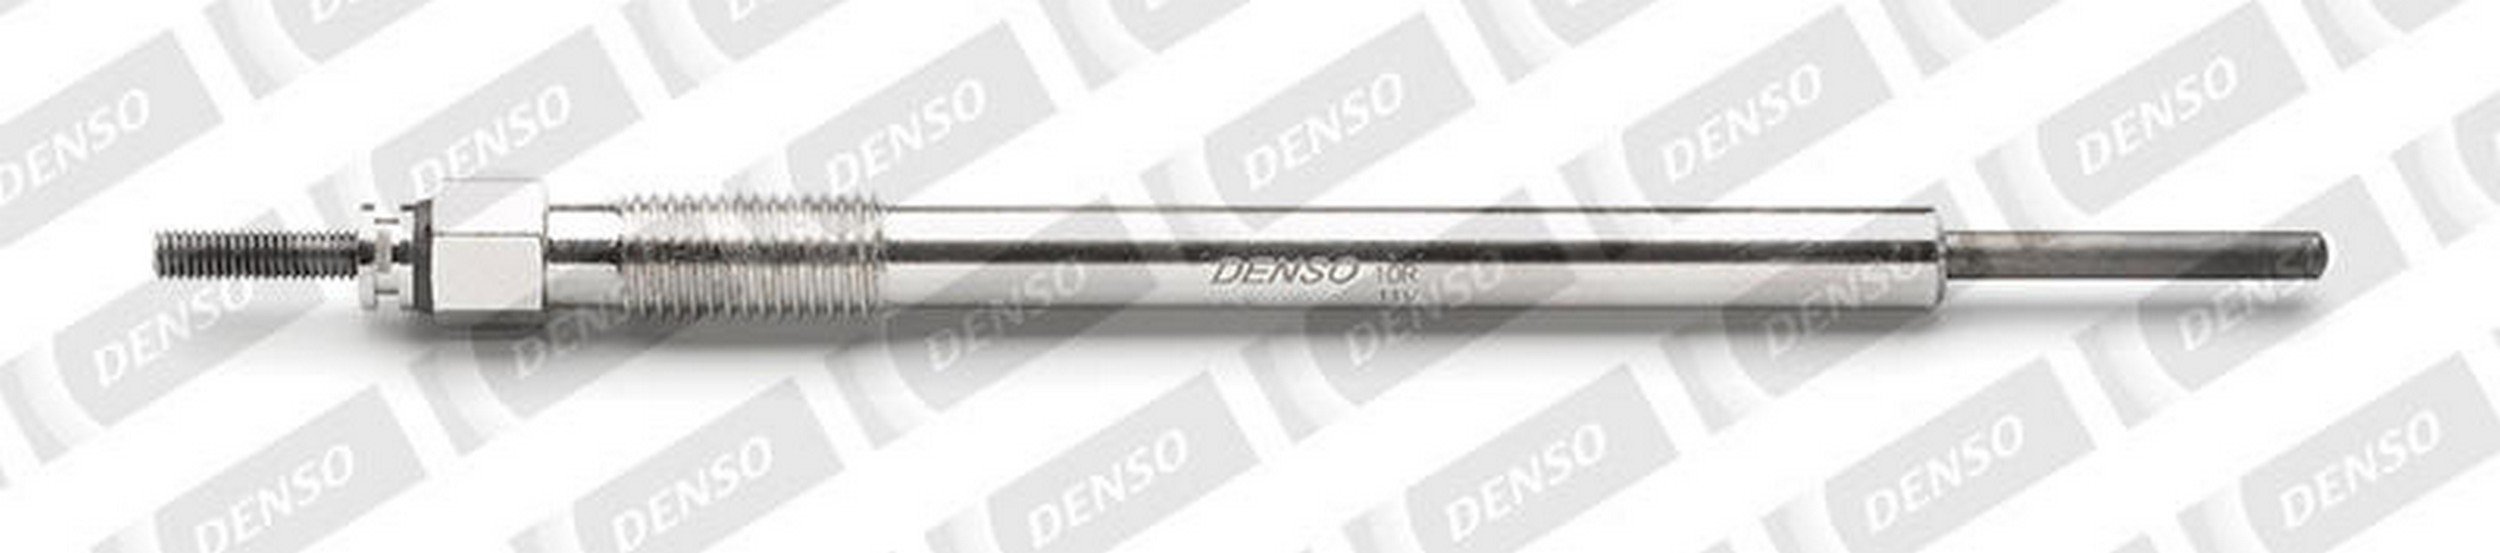 DENSO-AU DG-600